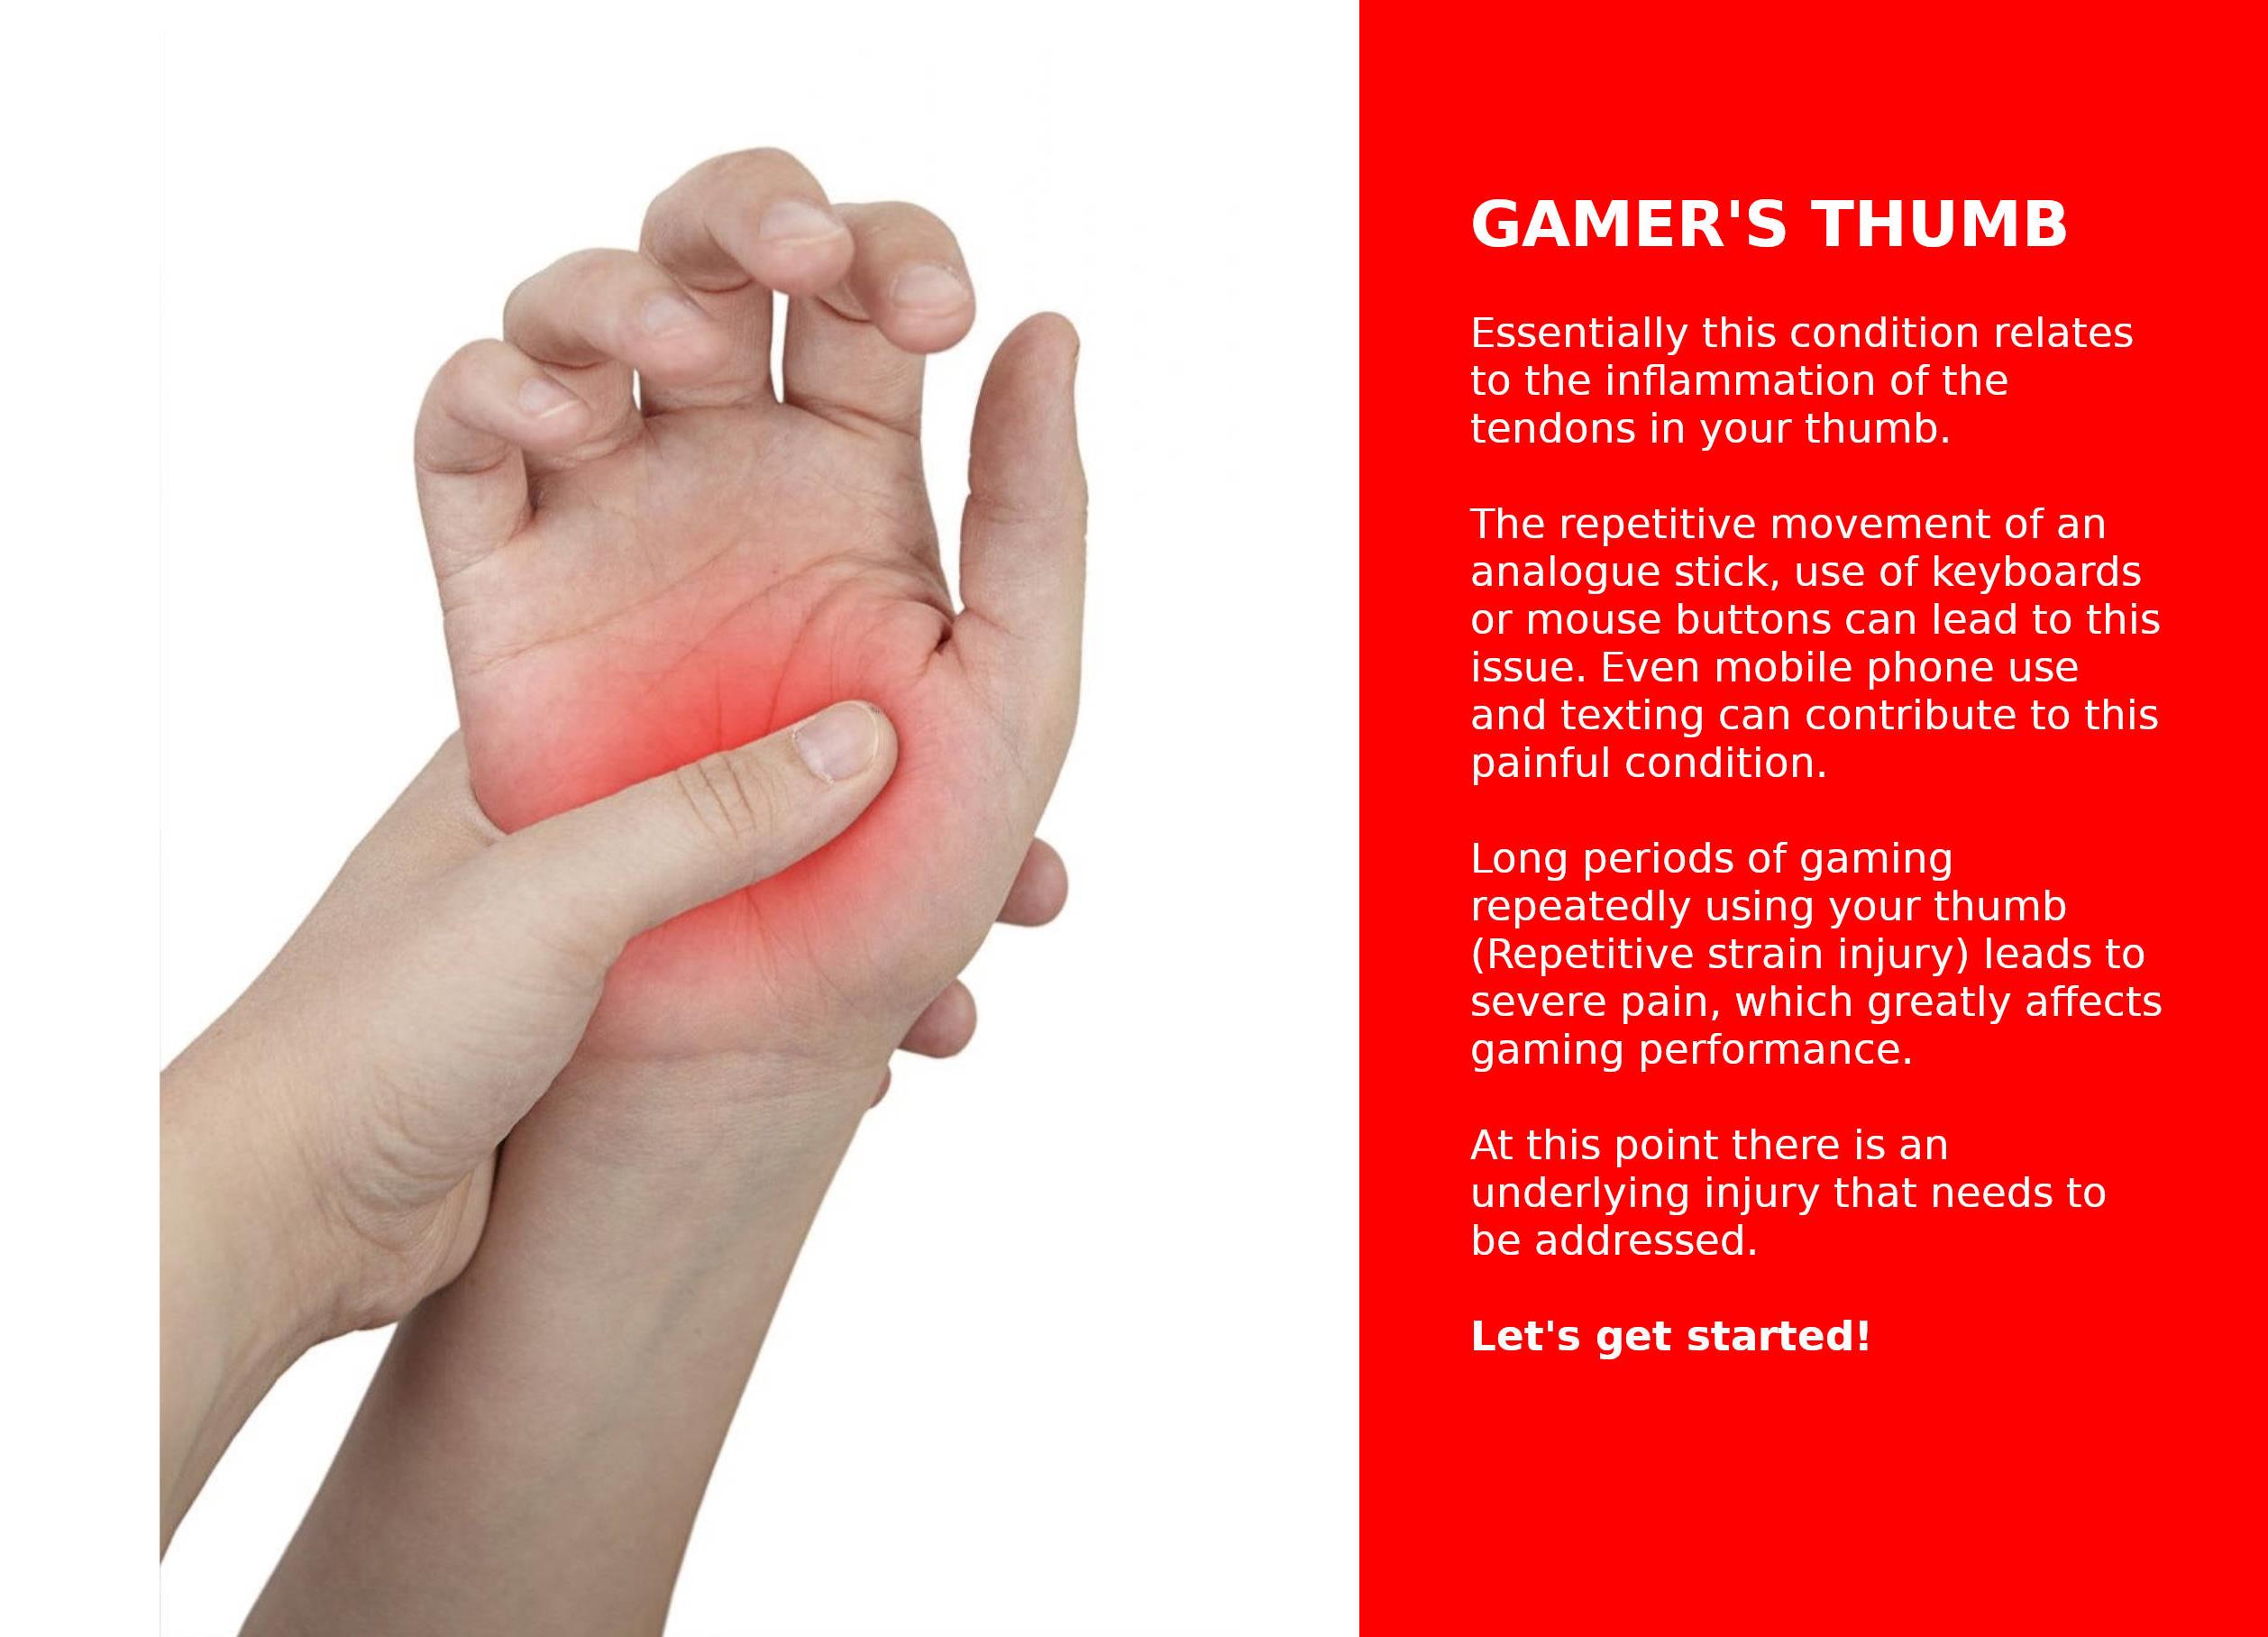 Gamer's Thumb Pain Explained